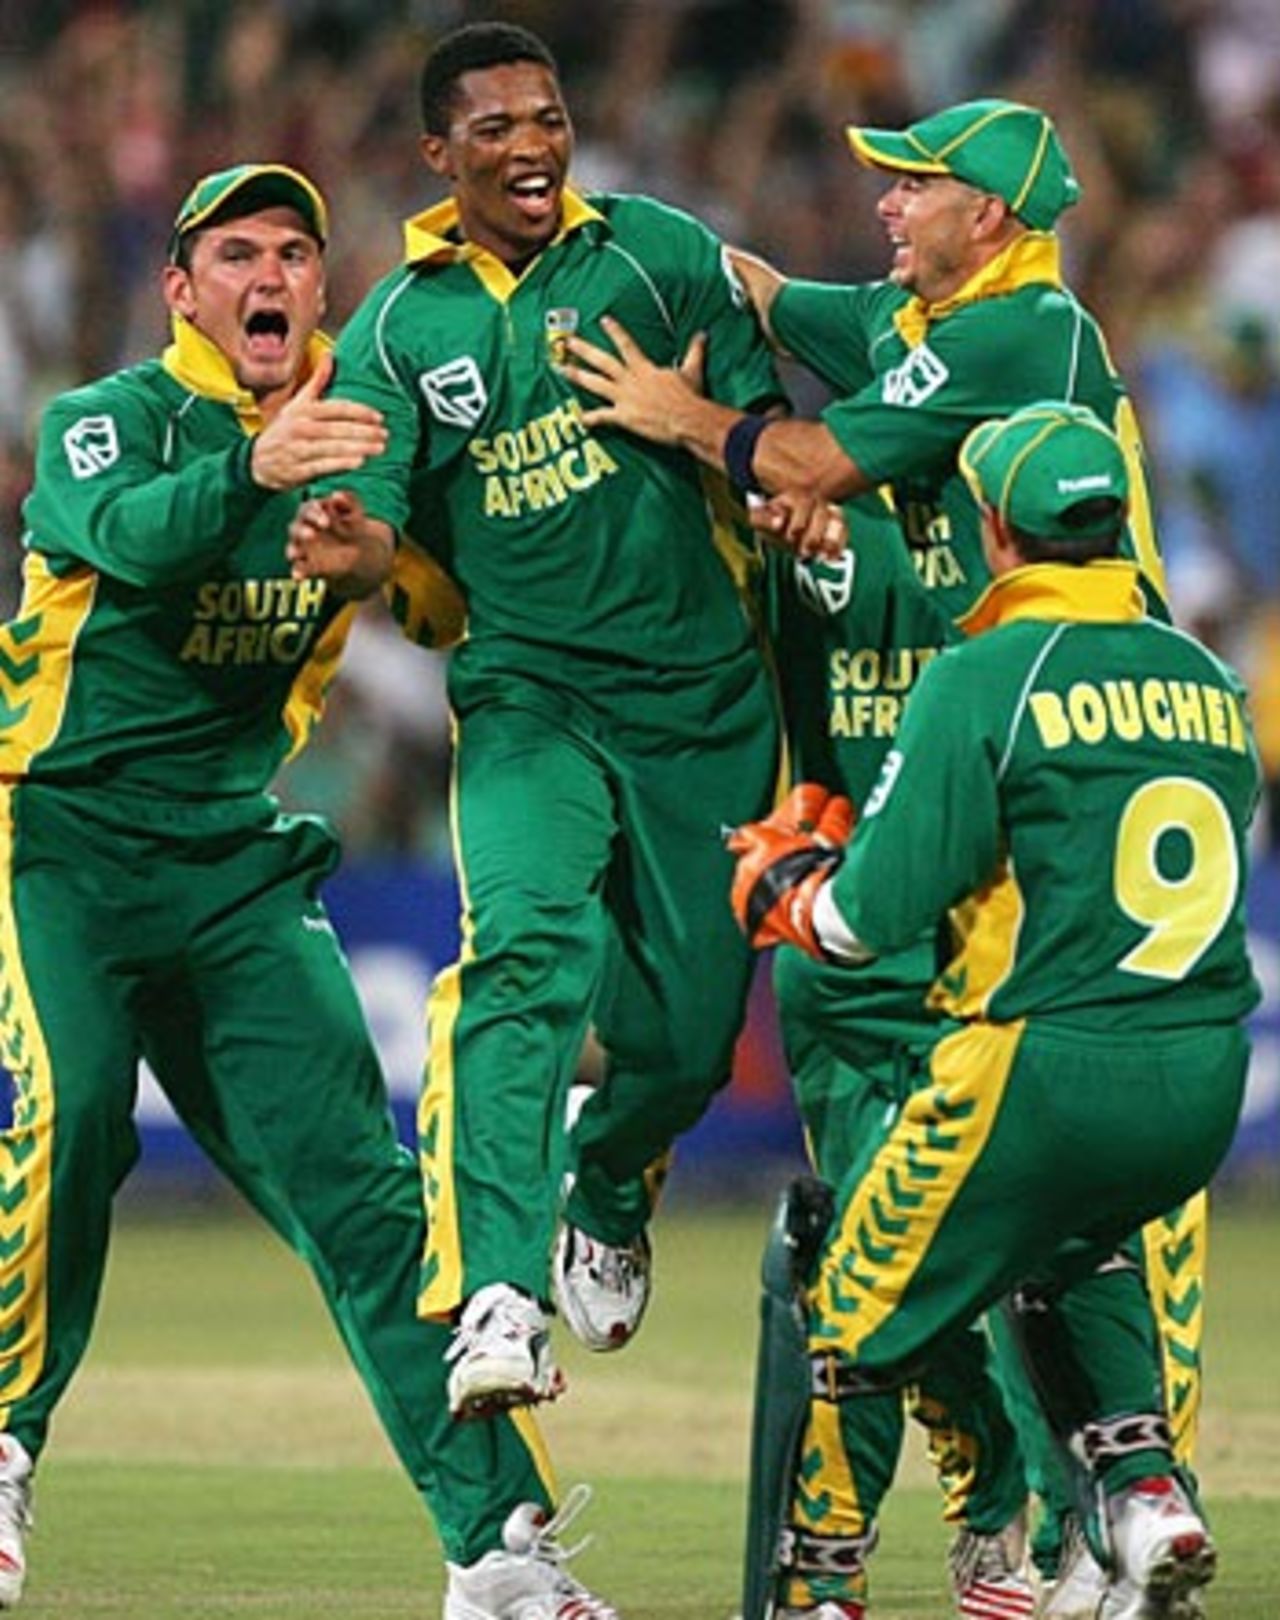 Makhaya Ntini celebrates dismissing Brett Lee, South Africa v Australia, 4th ODI, Durban, March 10, 2006